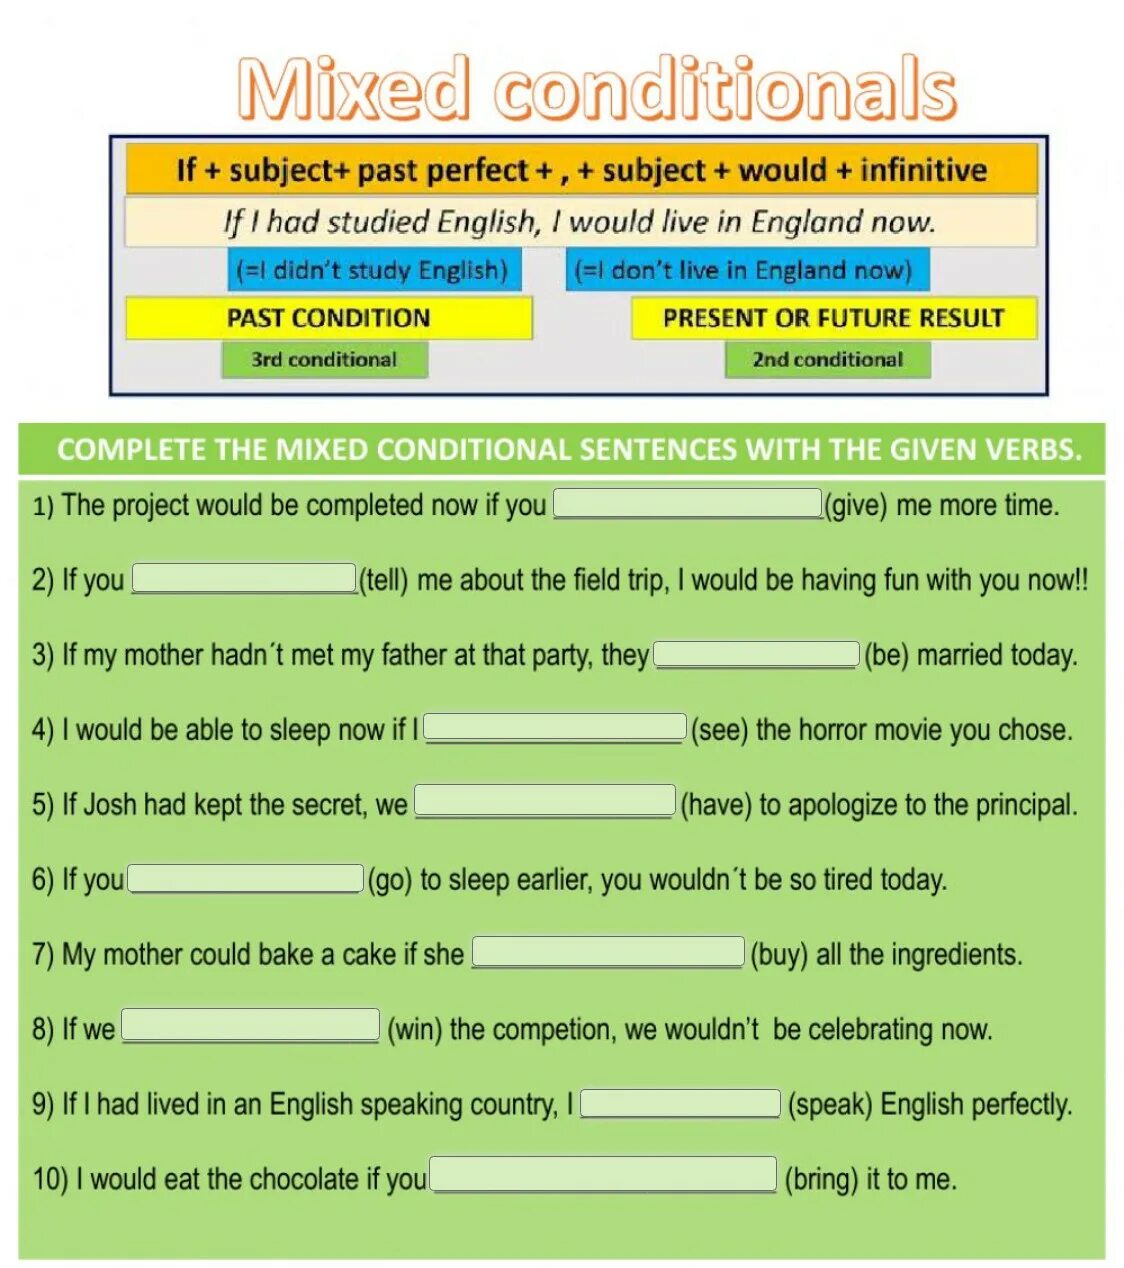 2 conditional speaking. Conditionals упражнения. Mixed conditionals в английском Worksheets. Условные предложения Worksheets. Conditional sentences микс.